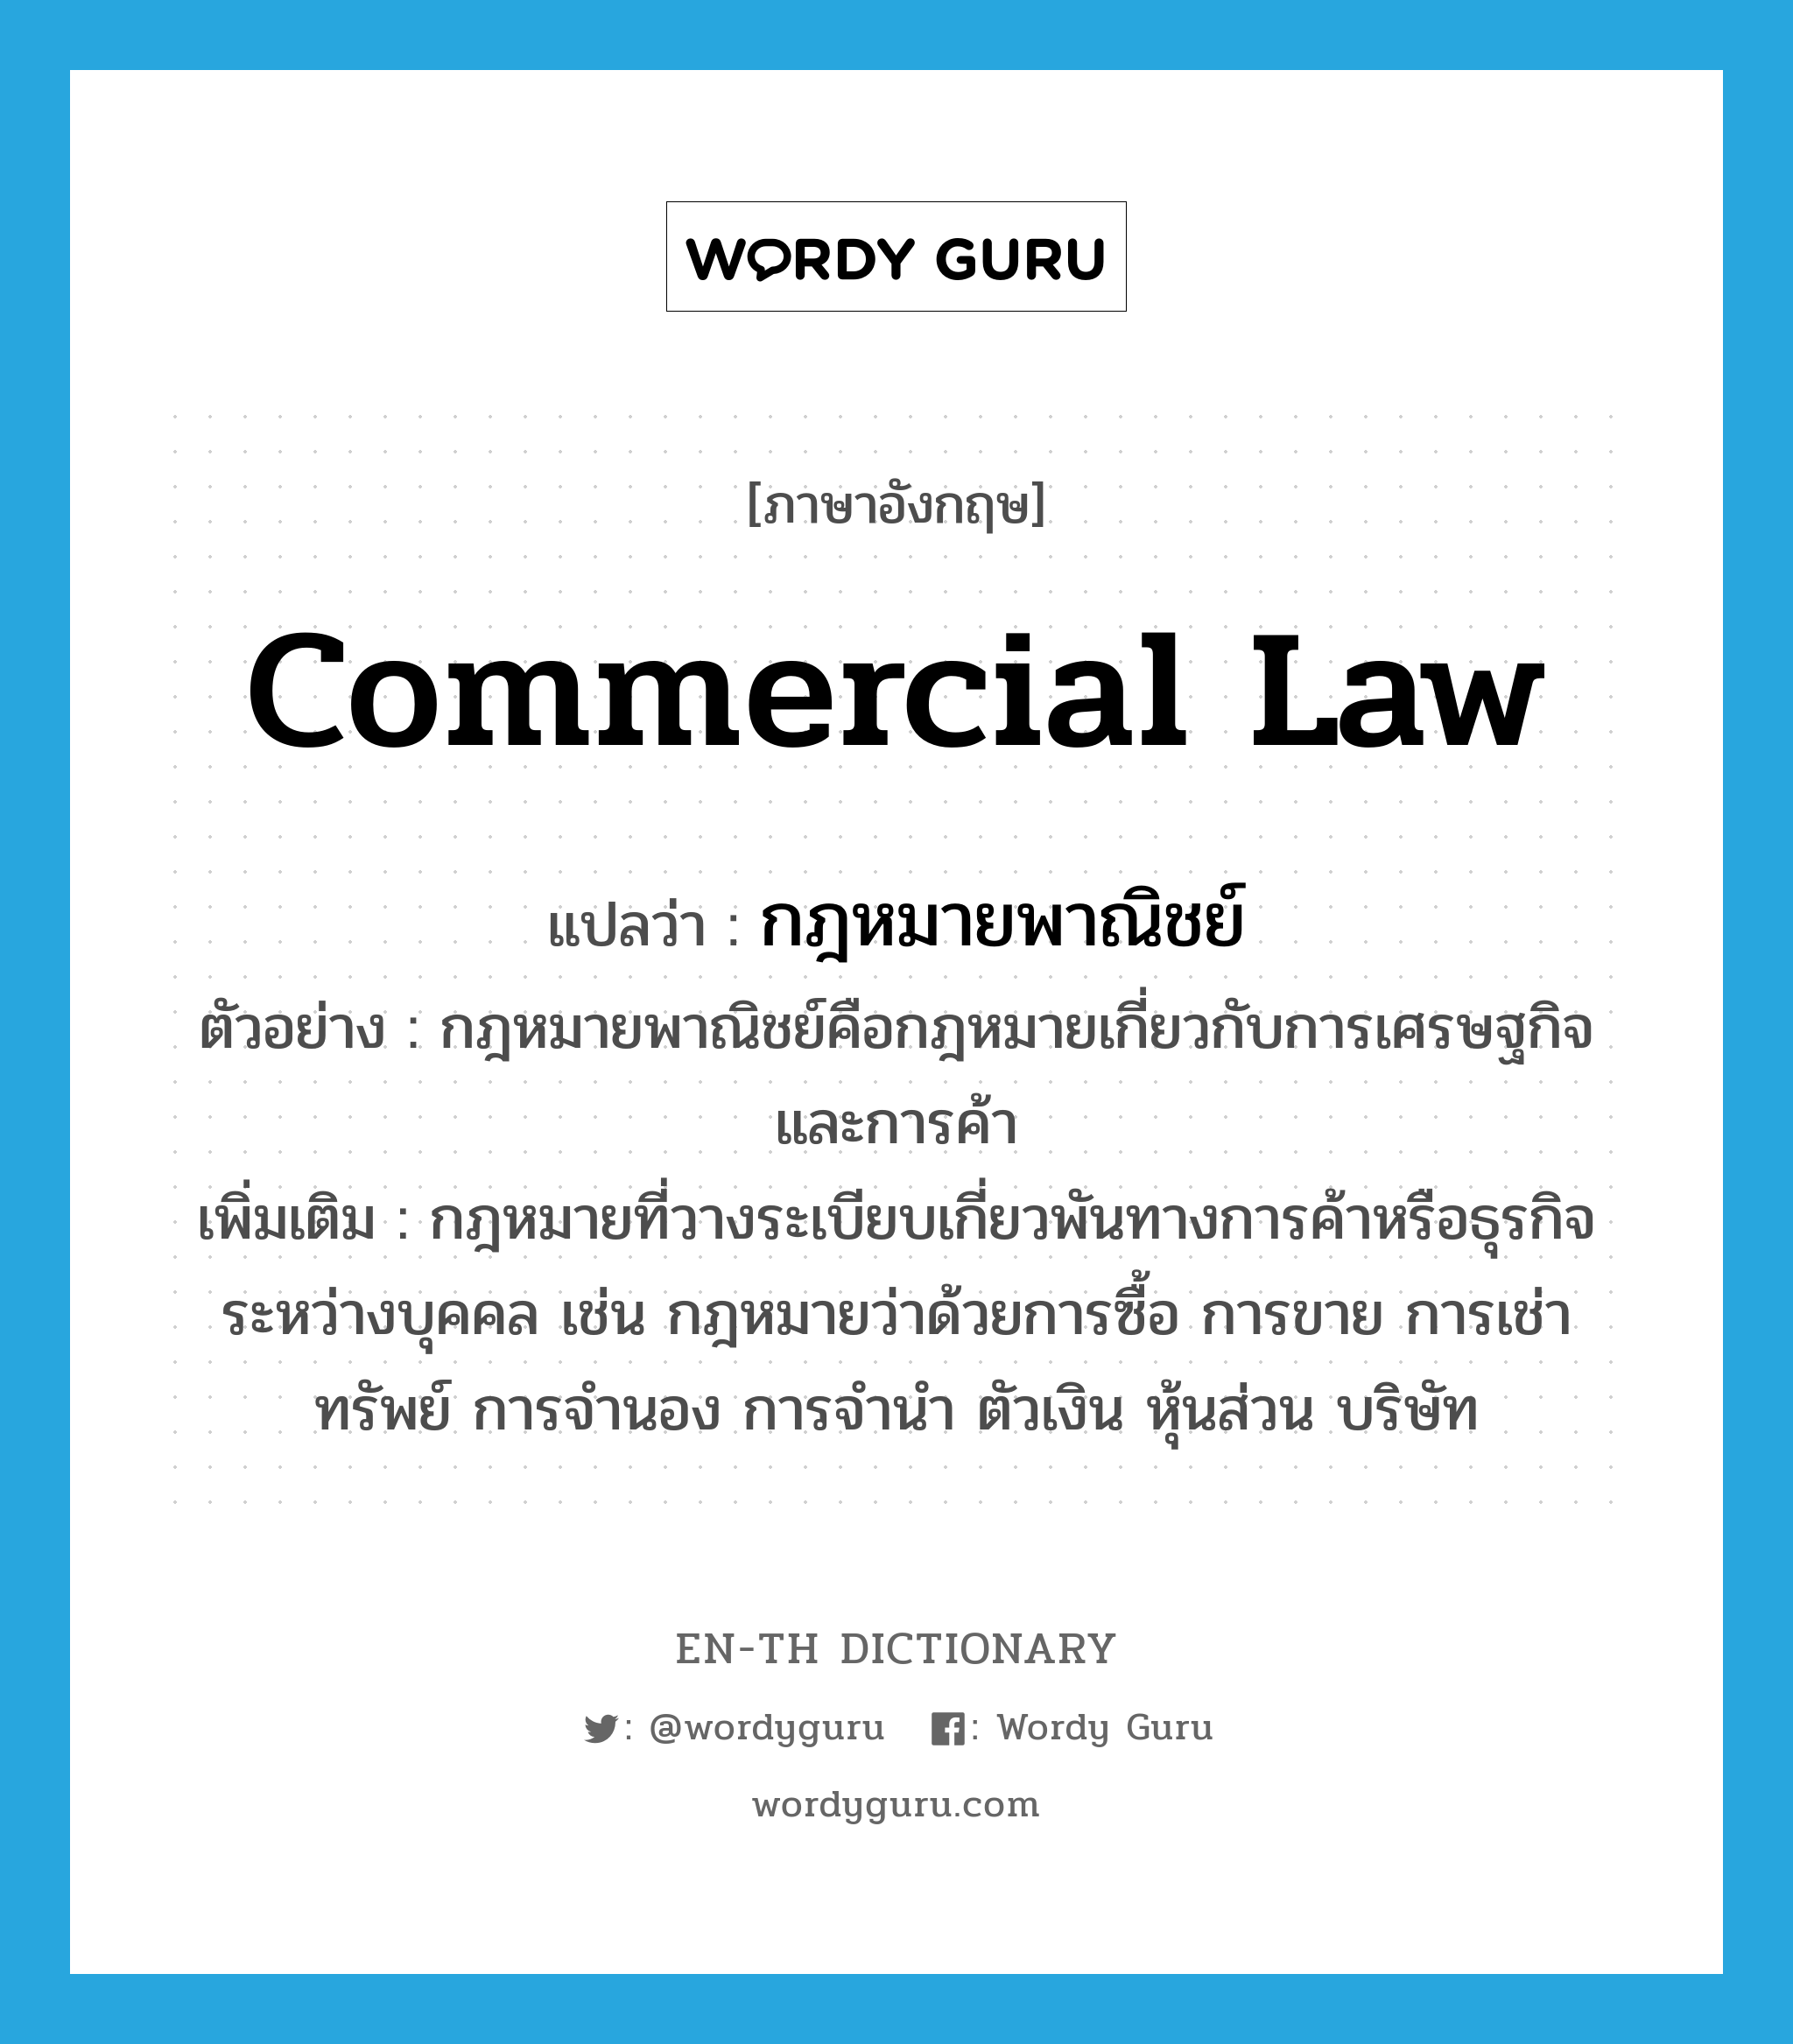 commercial law แปลว่า?, คำศัพท์ภาษาอังกฤษ commercial law แปลว่า กฎหมายพาณิชย์ ประเภท N ตัวอย่าง กฎหมายพาณิชย์คือกฎหมายเกี่ยวกับการเศรษฐกิจและการค้า เพิ่มเติม กฎหมายที่วางระเบียบเกี่ยวพันทางการค้าหรือธุรกิจระหว่างบุคคล เช่น กฎหมายว่าด้วยการซื้อ การขาย การเช่าทรัพย์ การจำนอง การจำนำ ตัวเงิน หุ้นส่วน บริษัท หมวด N